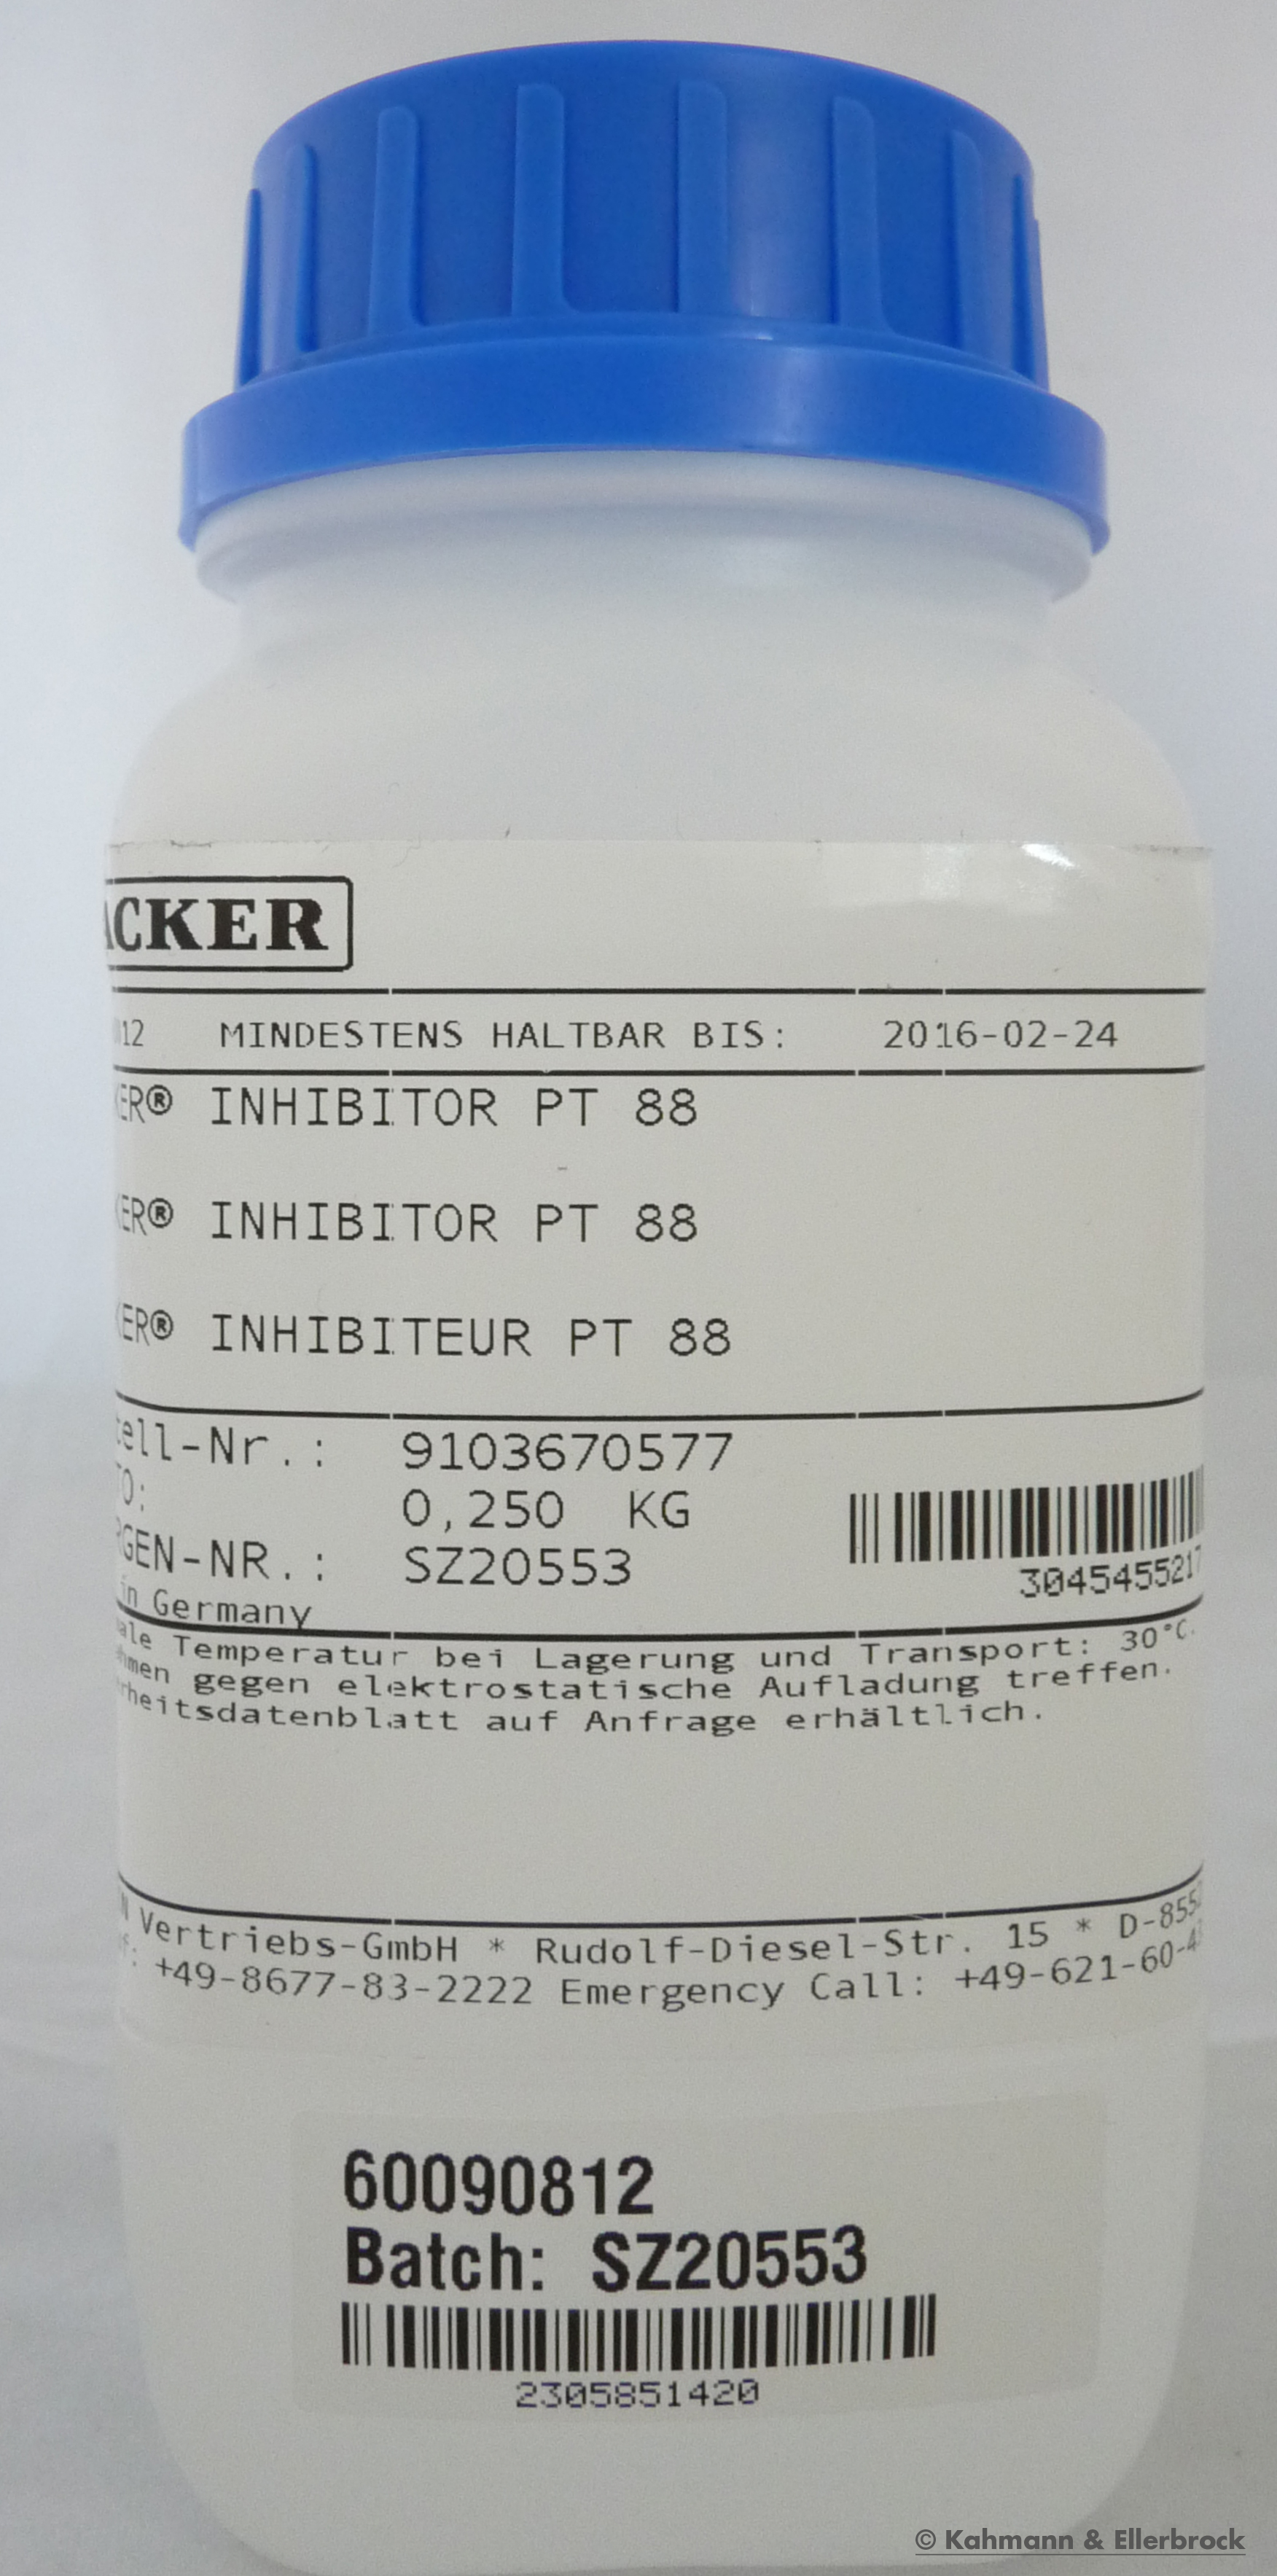 Inhibitor PT 88